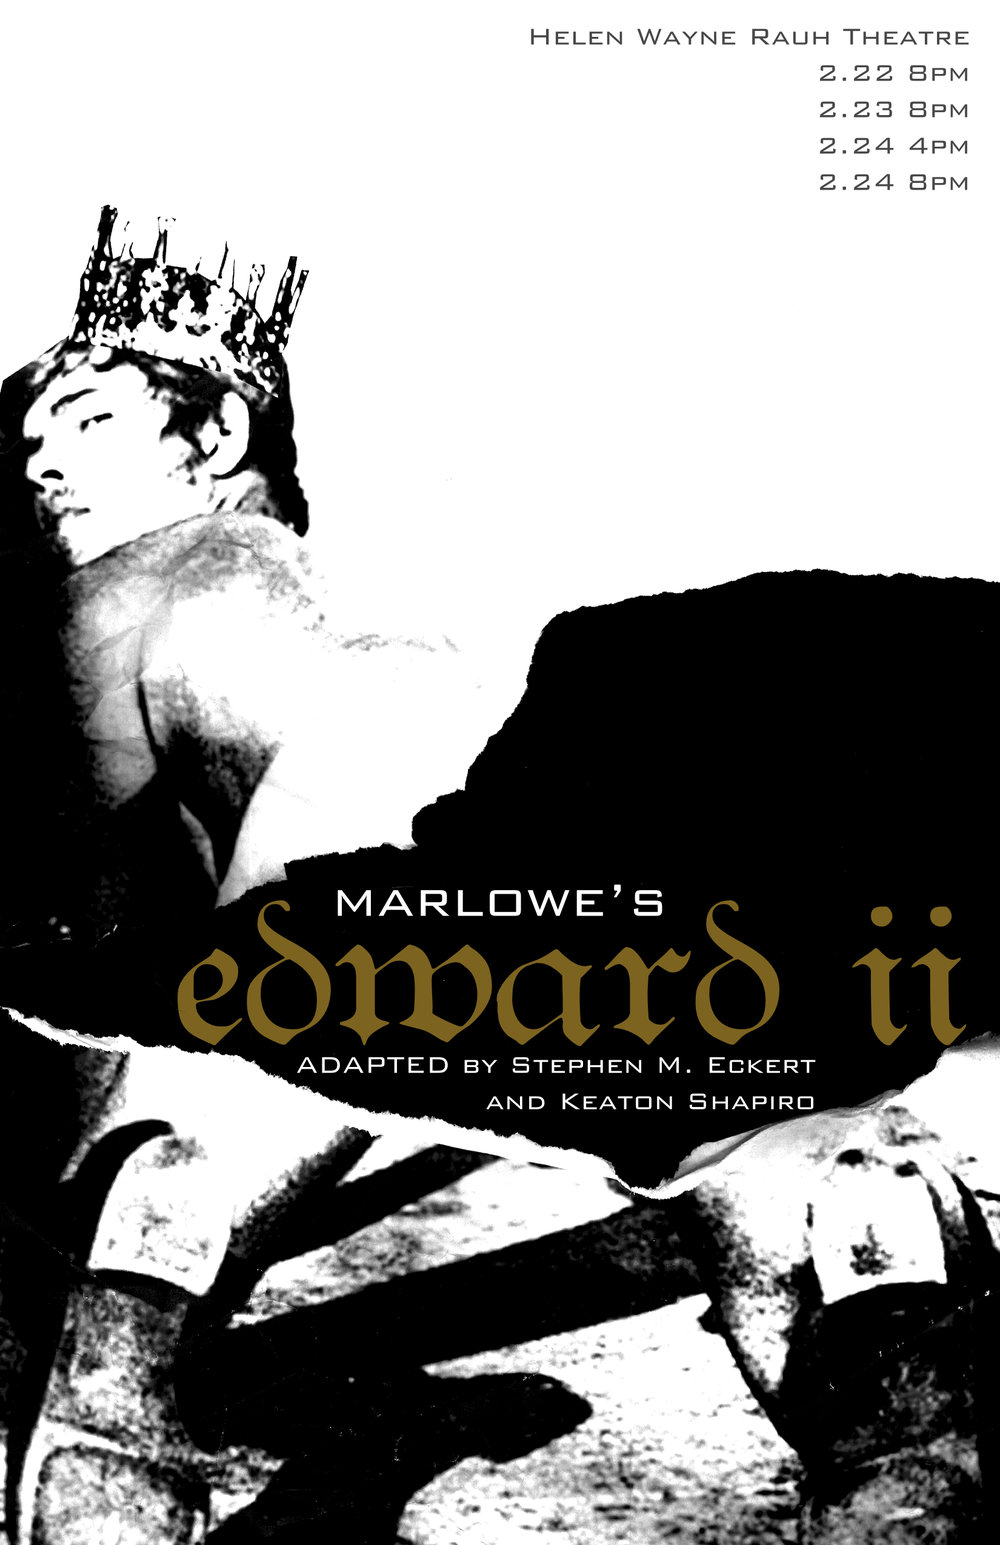 marlowe edward ii text